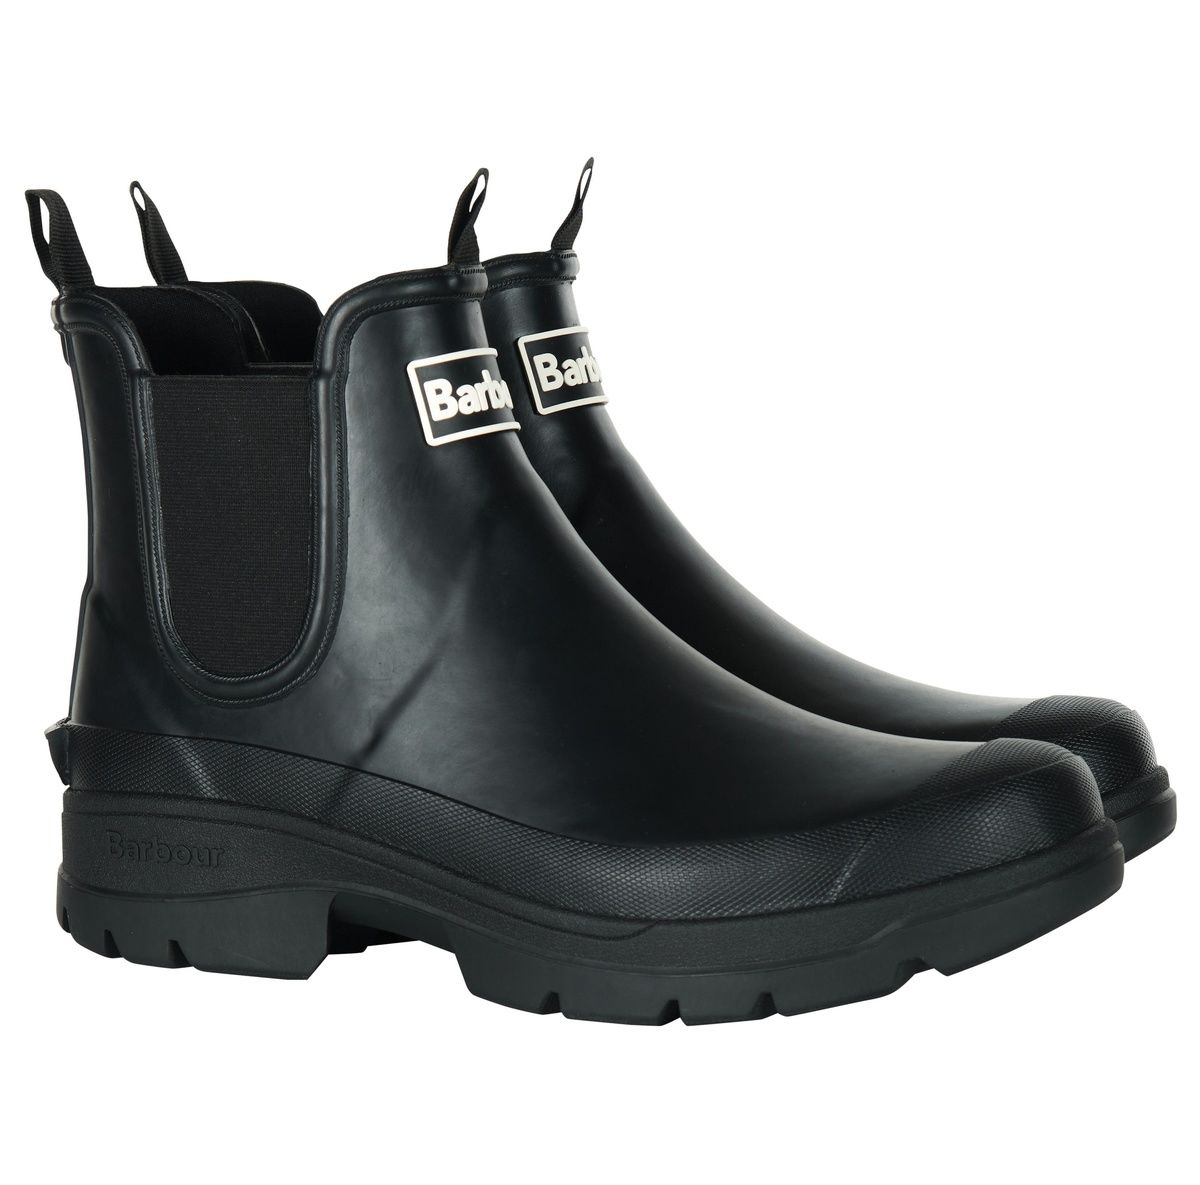 Barbour Nimbus Wellie Black Boots Mrf0028-Bk31 In Size 11 In Plain Black